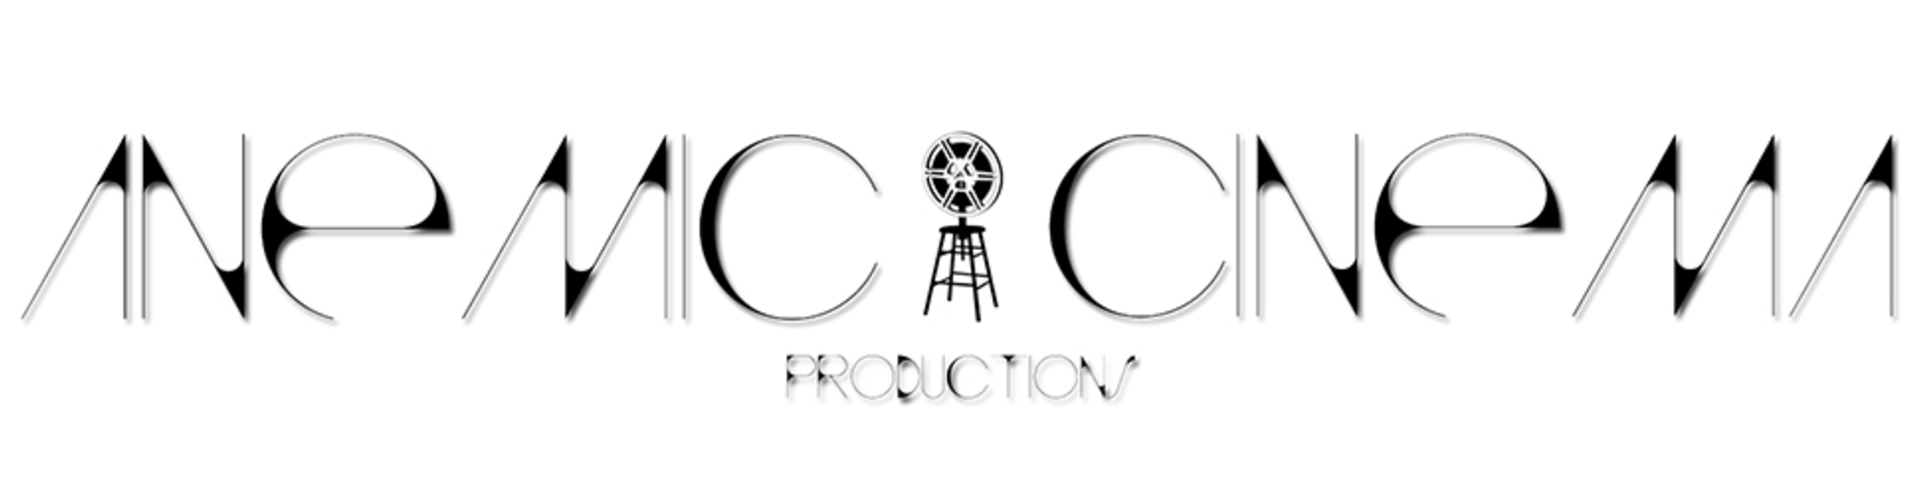 Anemic Cinema Productions